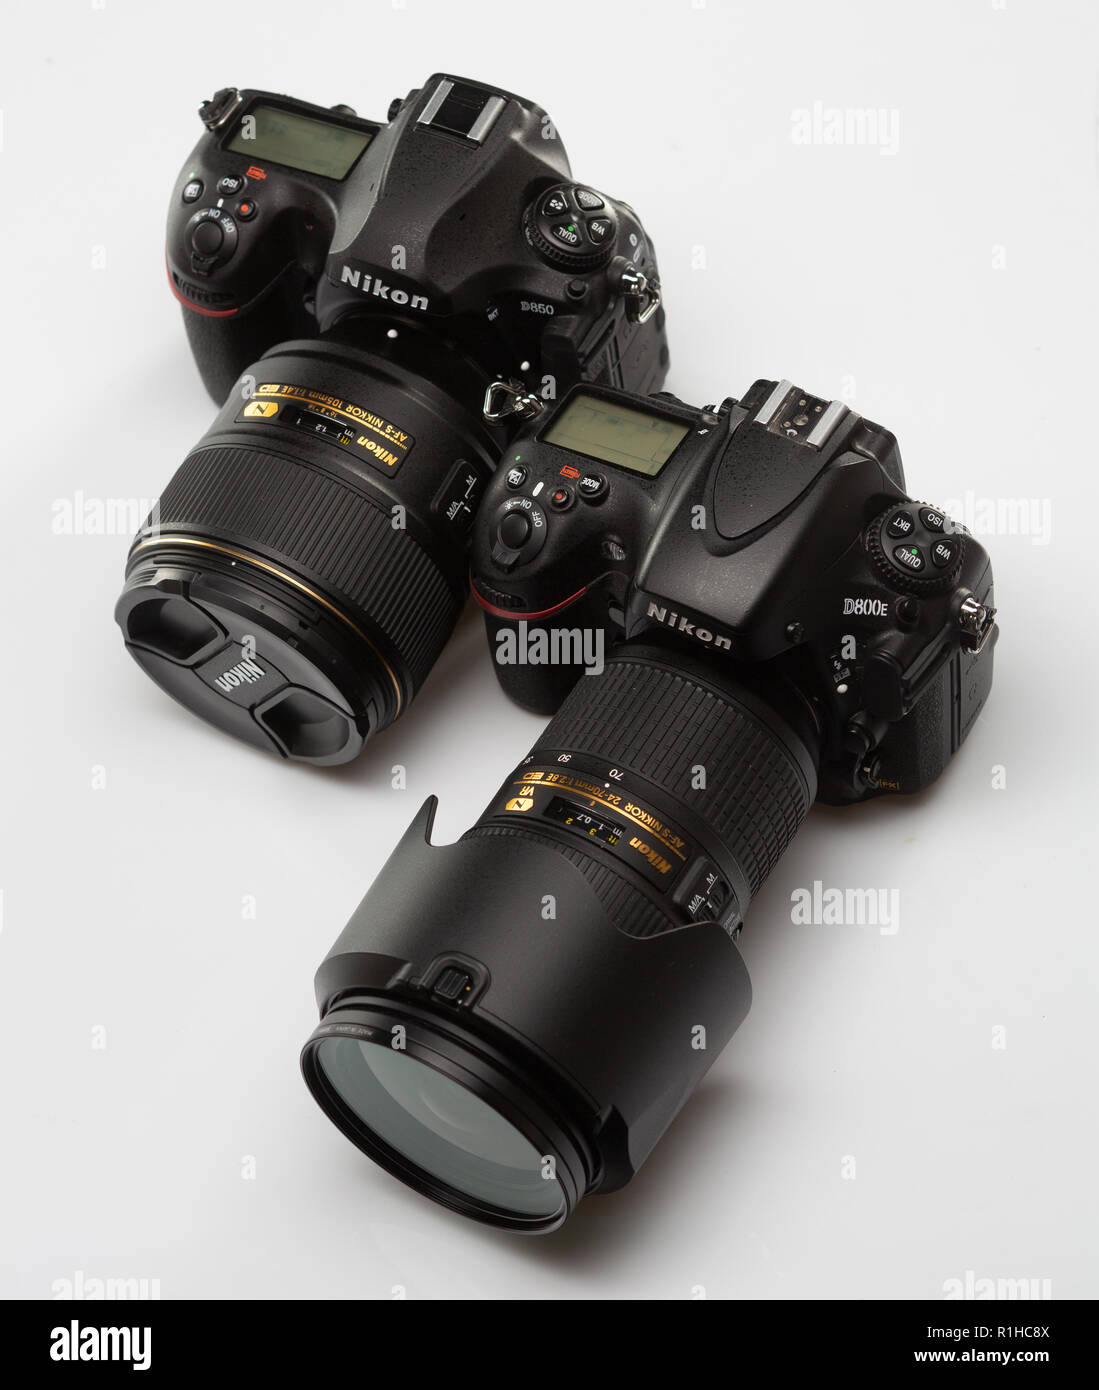 Nikon nano hi-res stock photography and images - Alamy